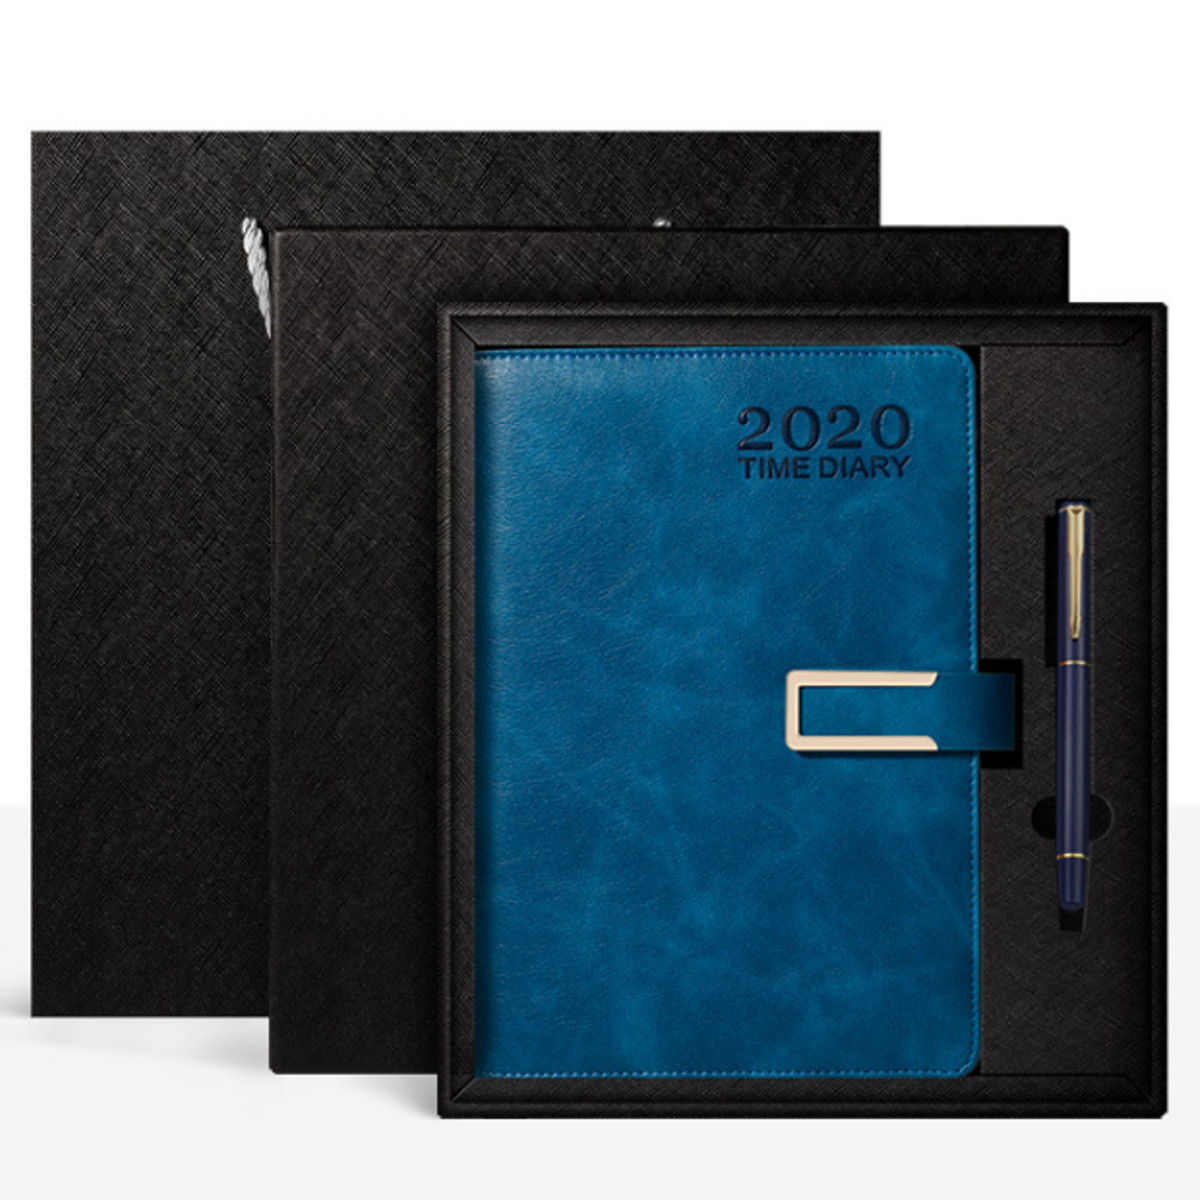 2020-schedule-book-365-days-daily-schedule-calendar-notepad-work-log-notebook-1617396-2